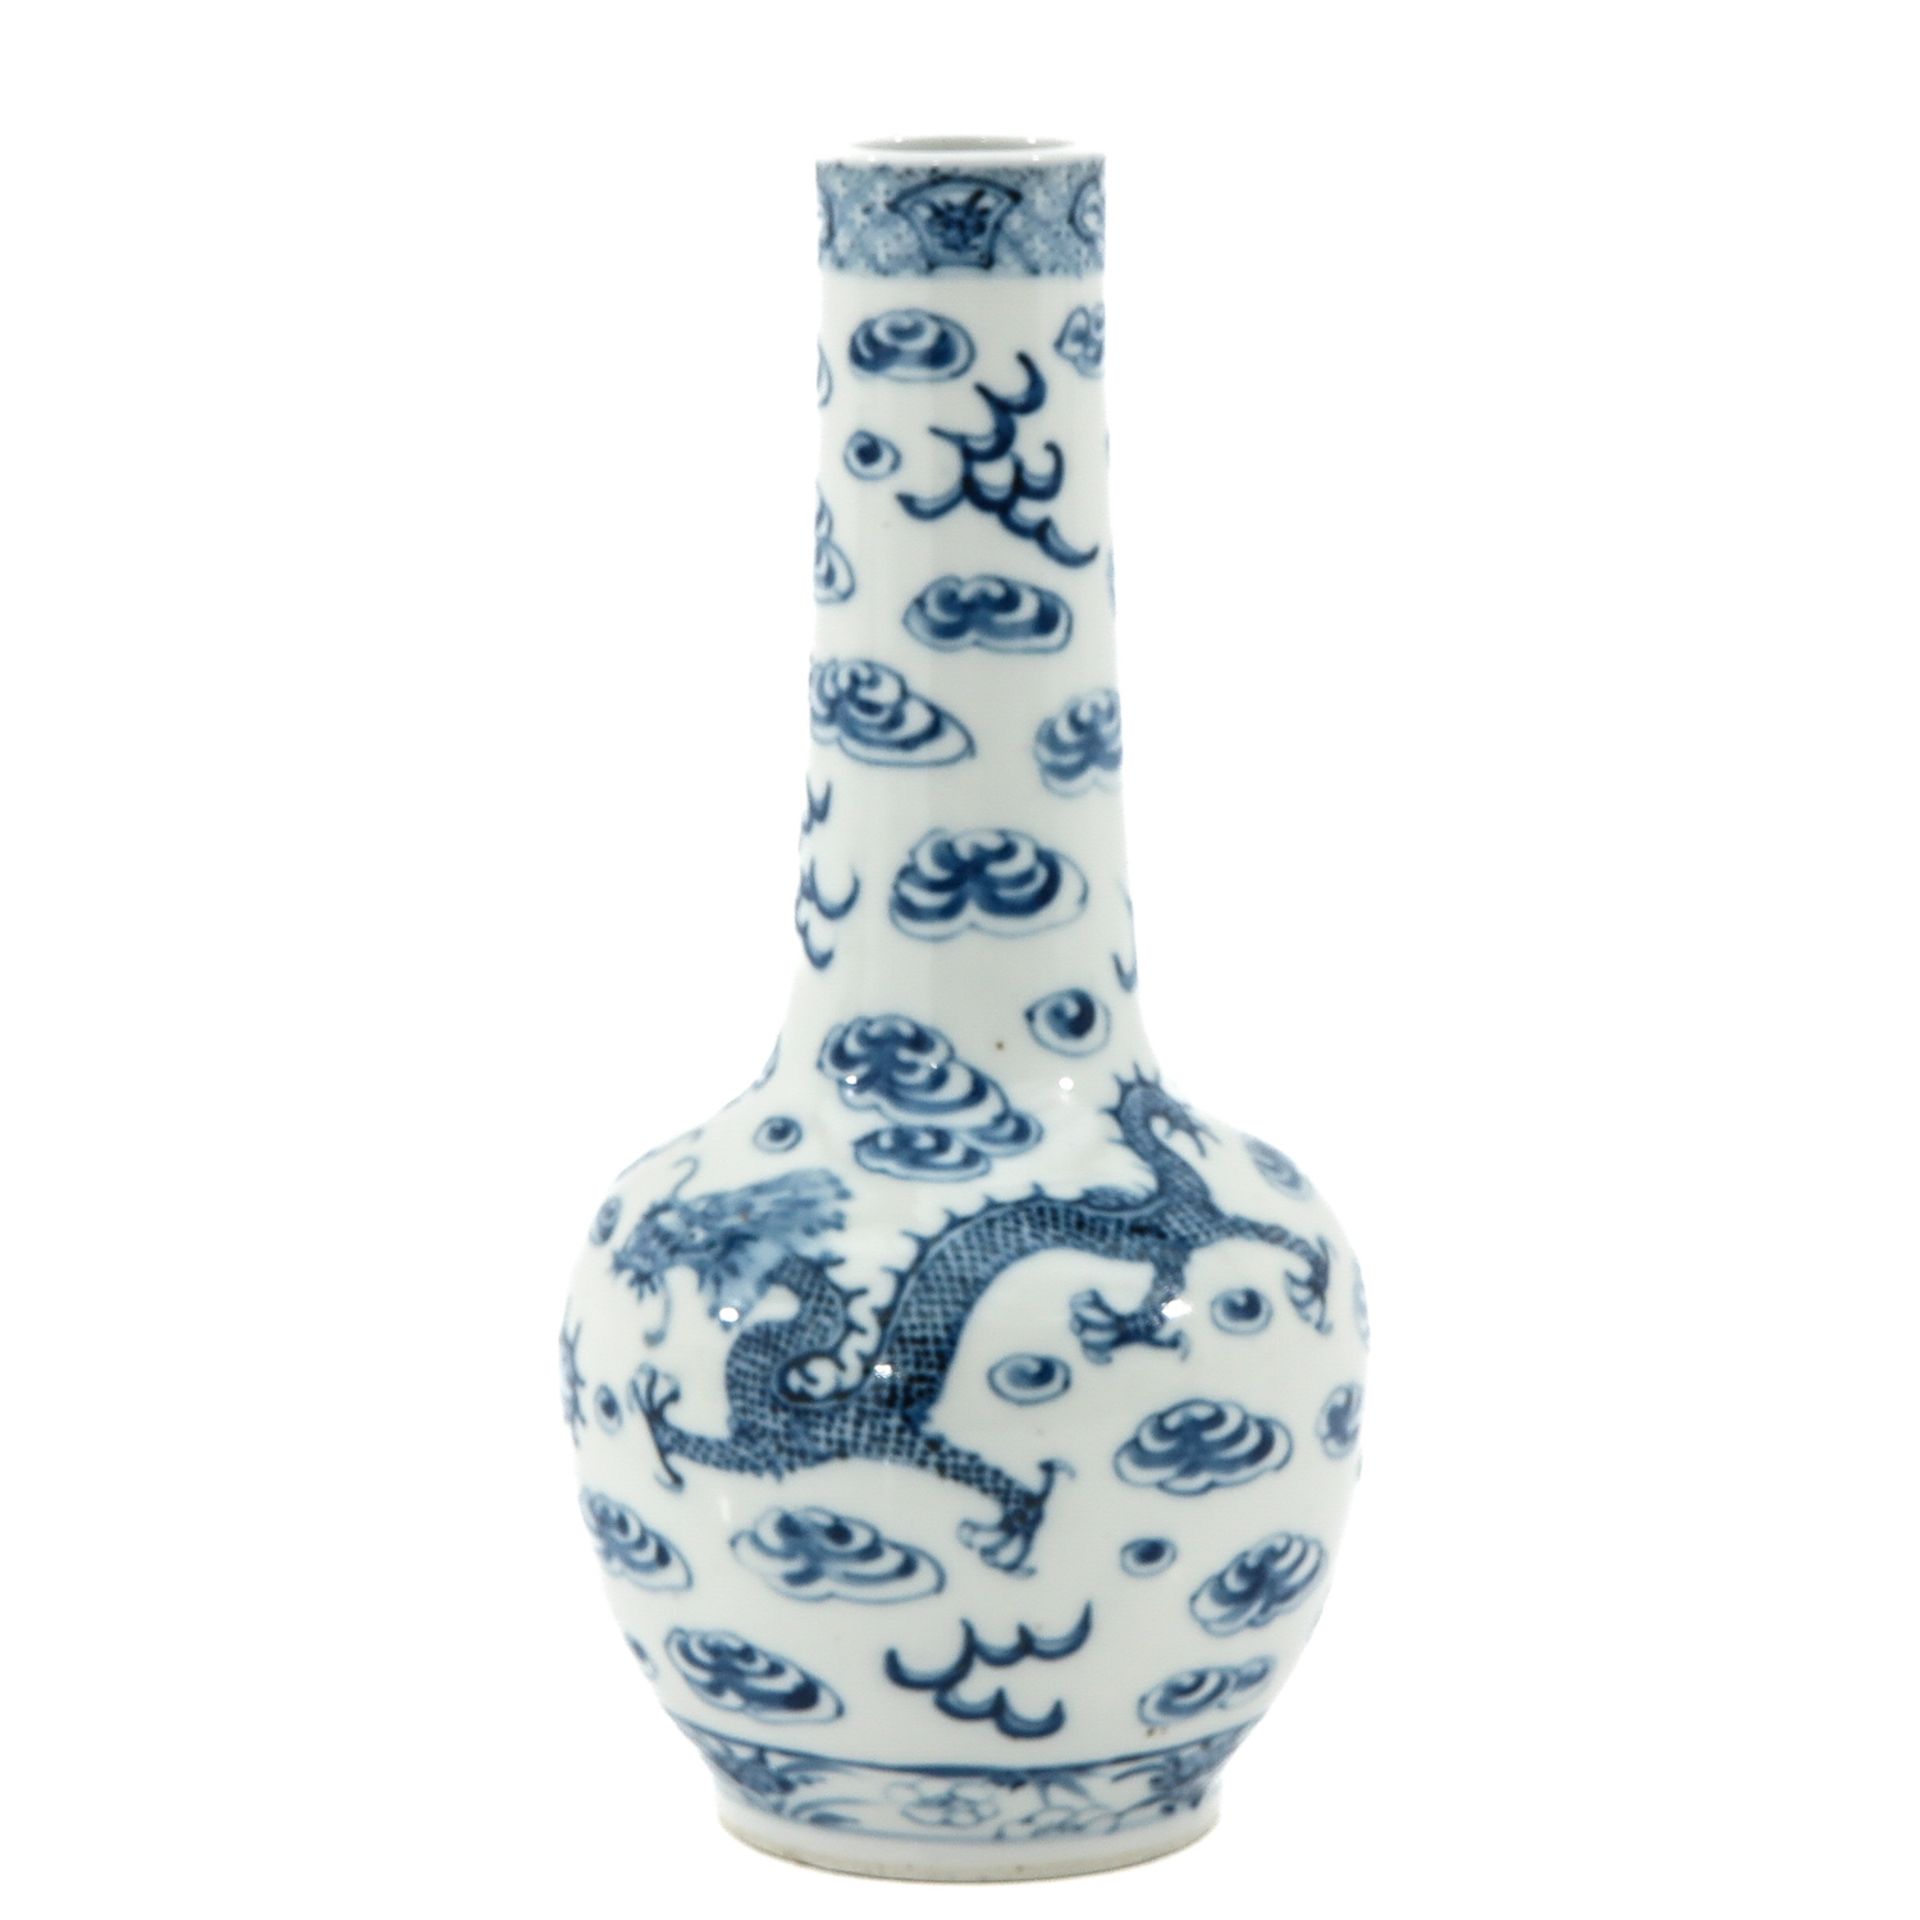 A BLue and White Bottle Vase